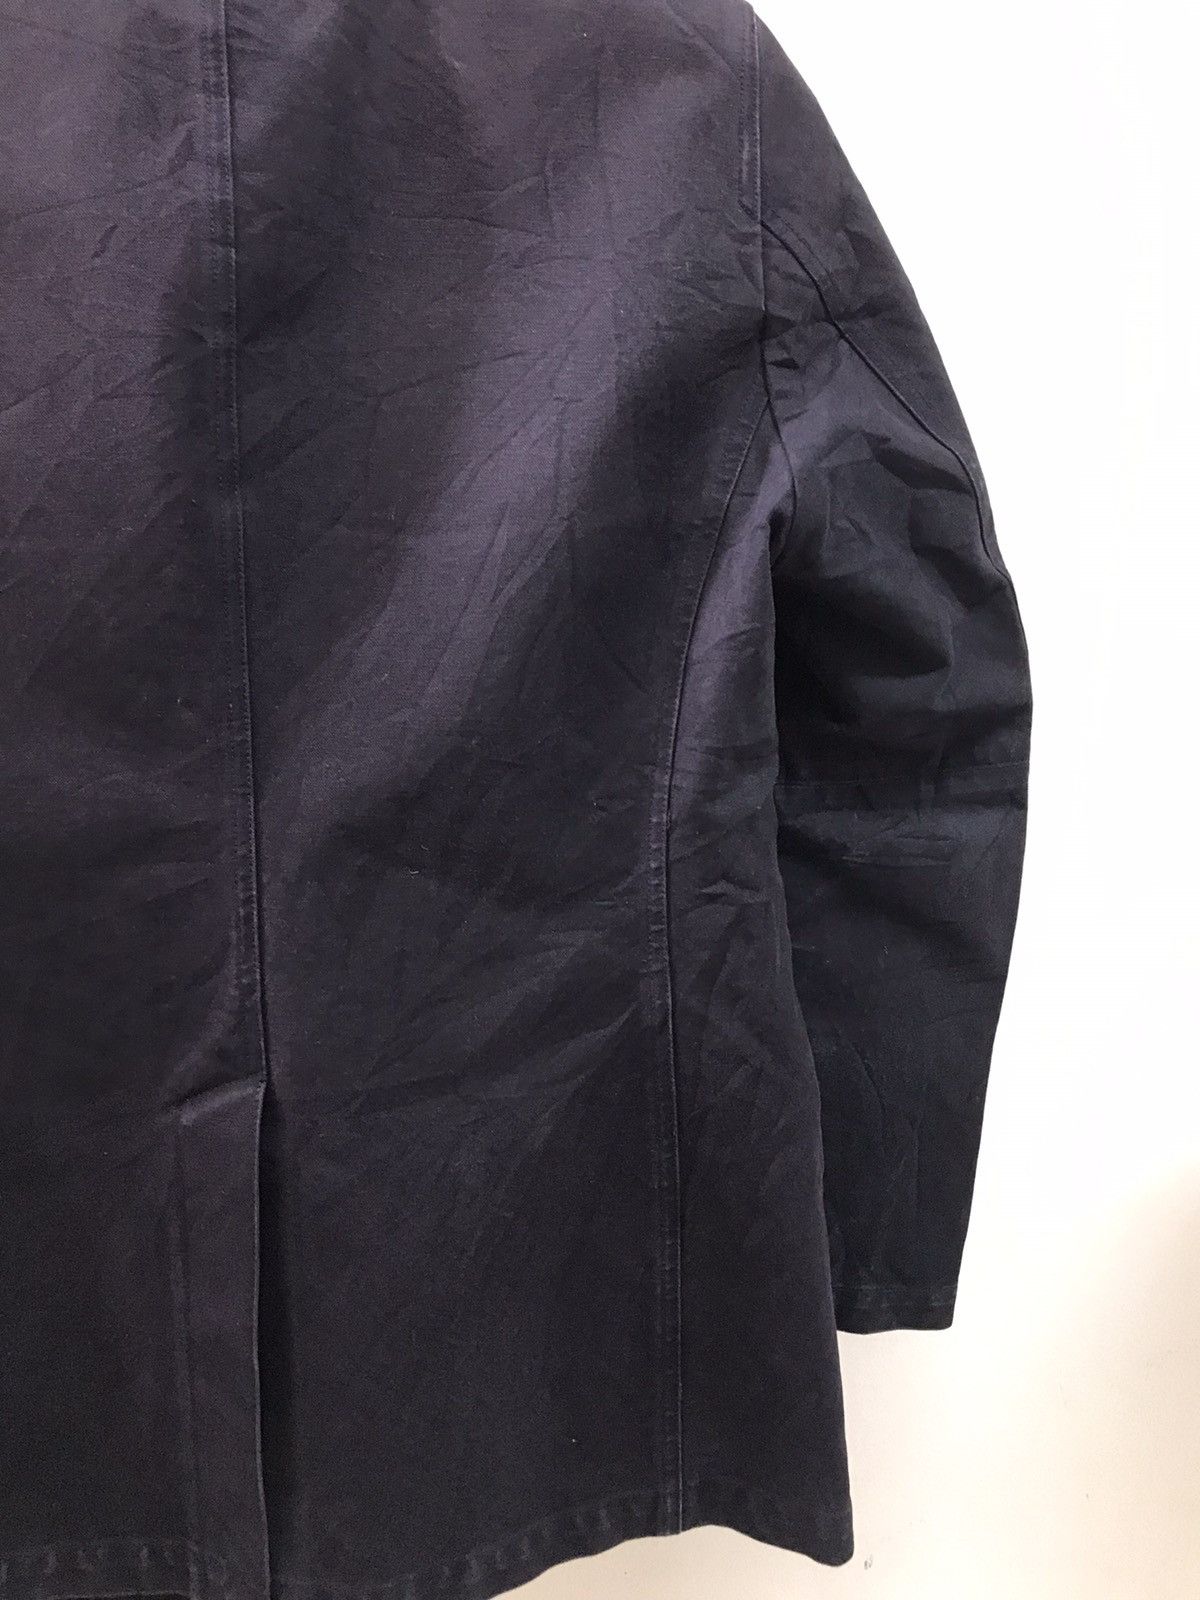 Japanese Brand Monkey time jacket Size US M / EU 48-50 / 2 - 8 Preview